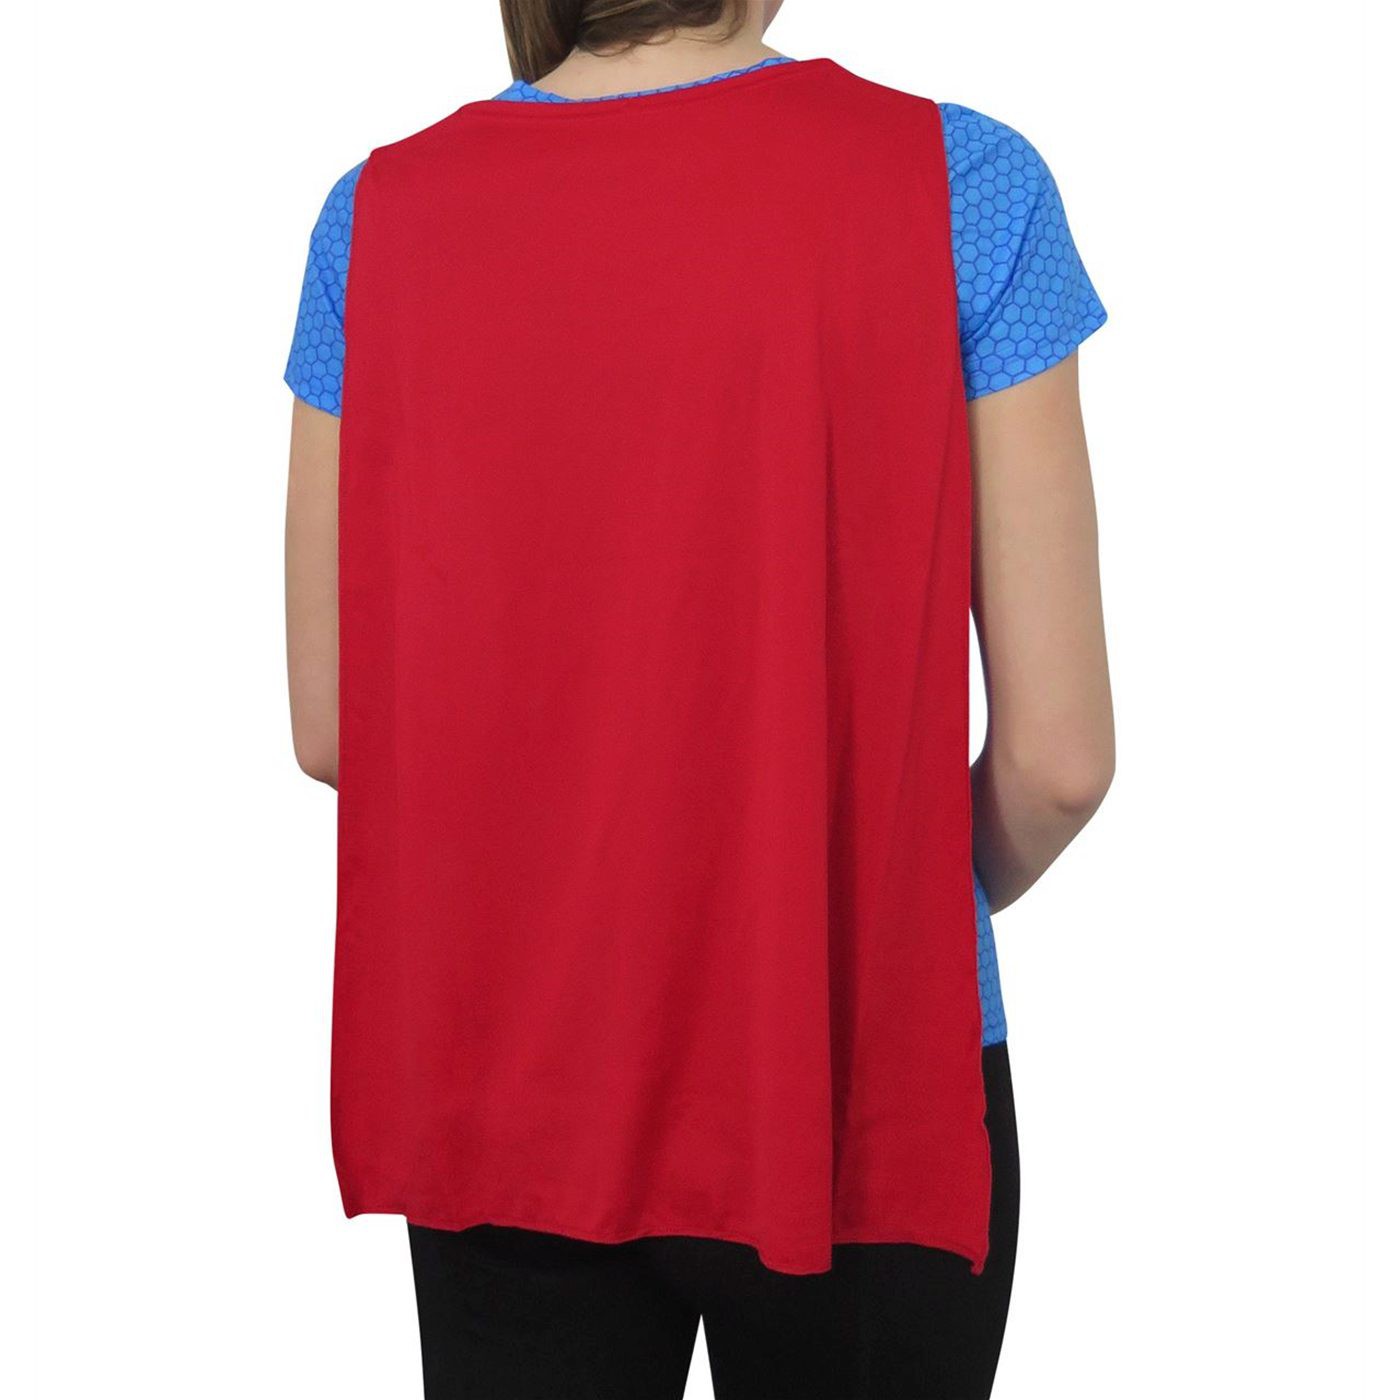 Supergirl Suit Up Women's Costume T-Shirt